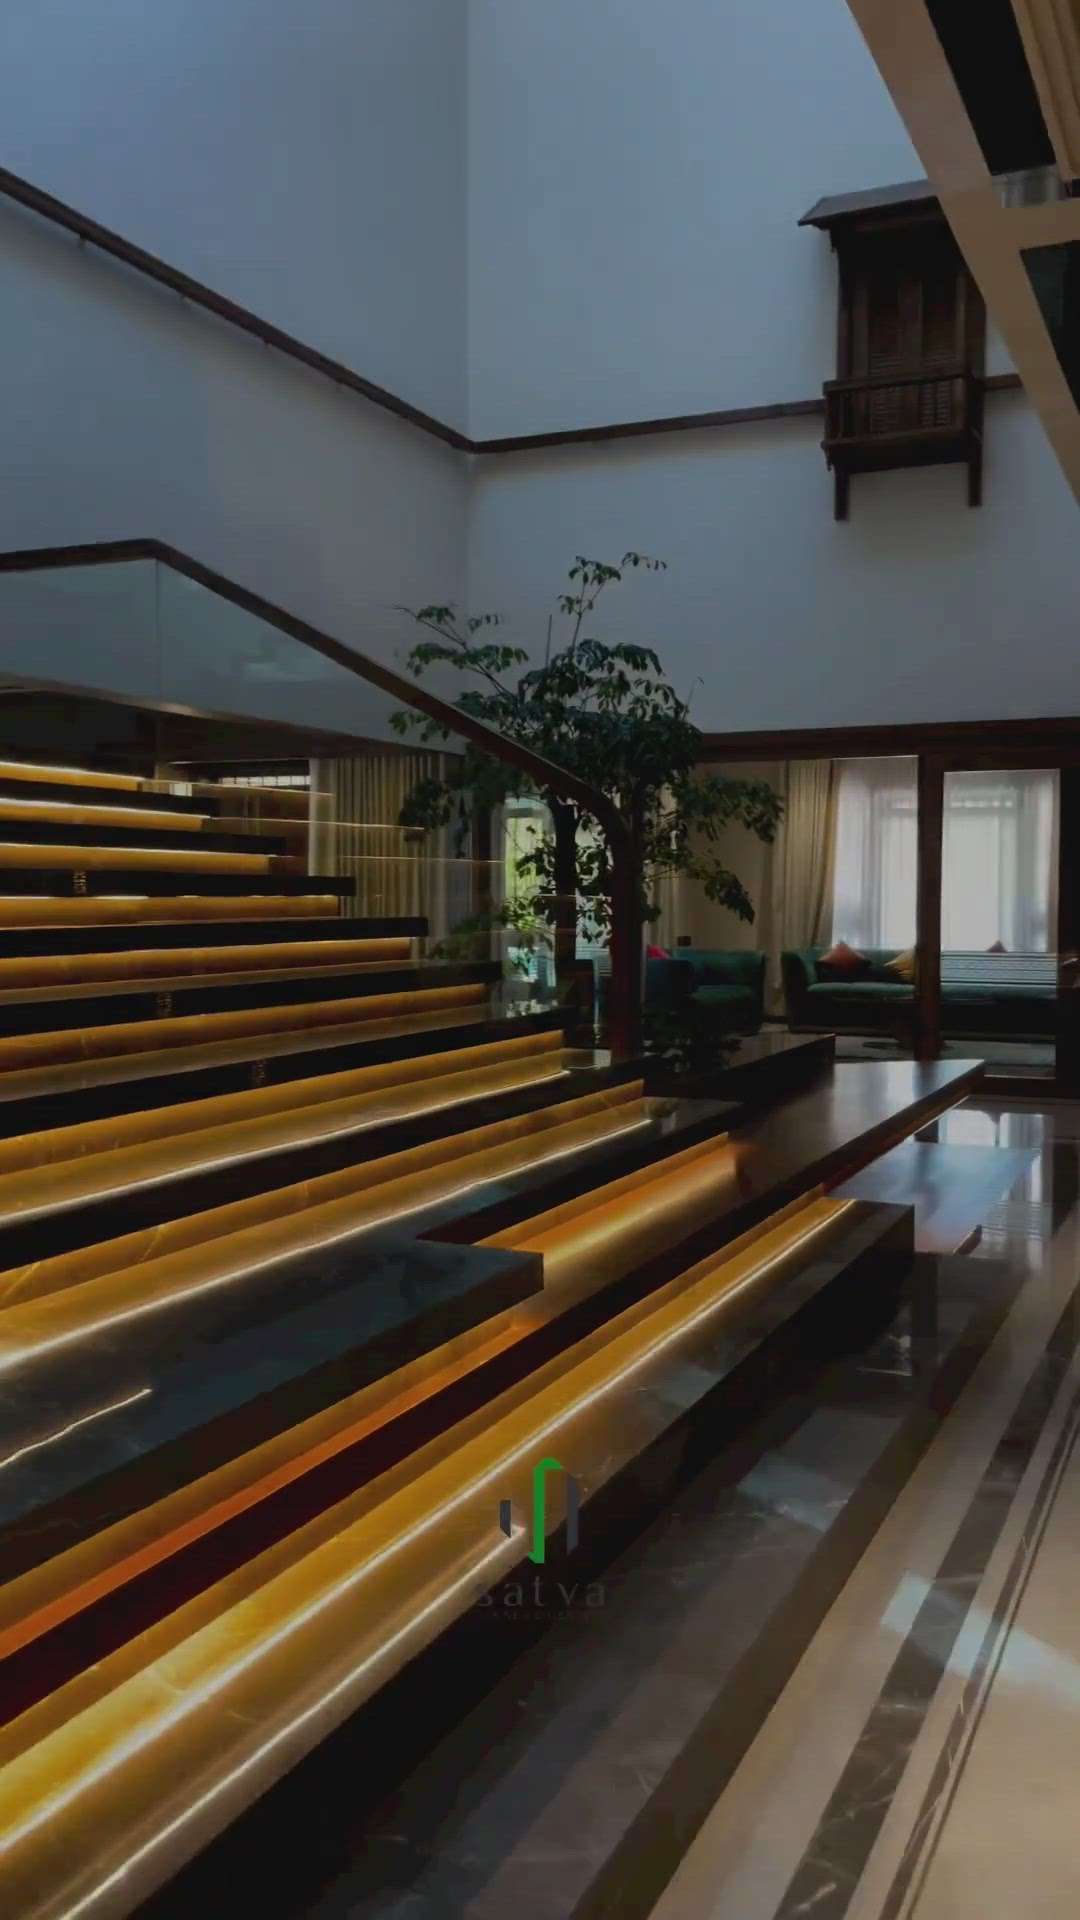 Staircase

Architects: SATVA THE NEW DIMENSION
@satva__